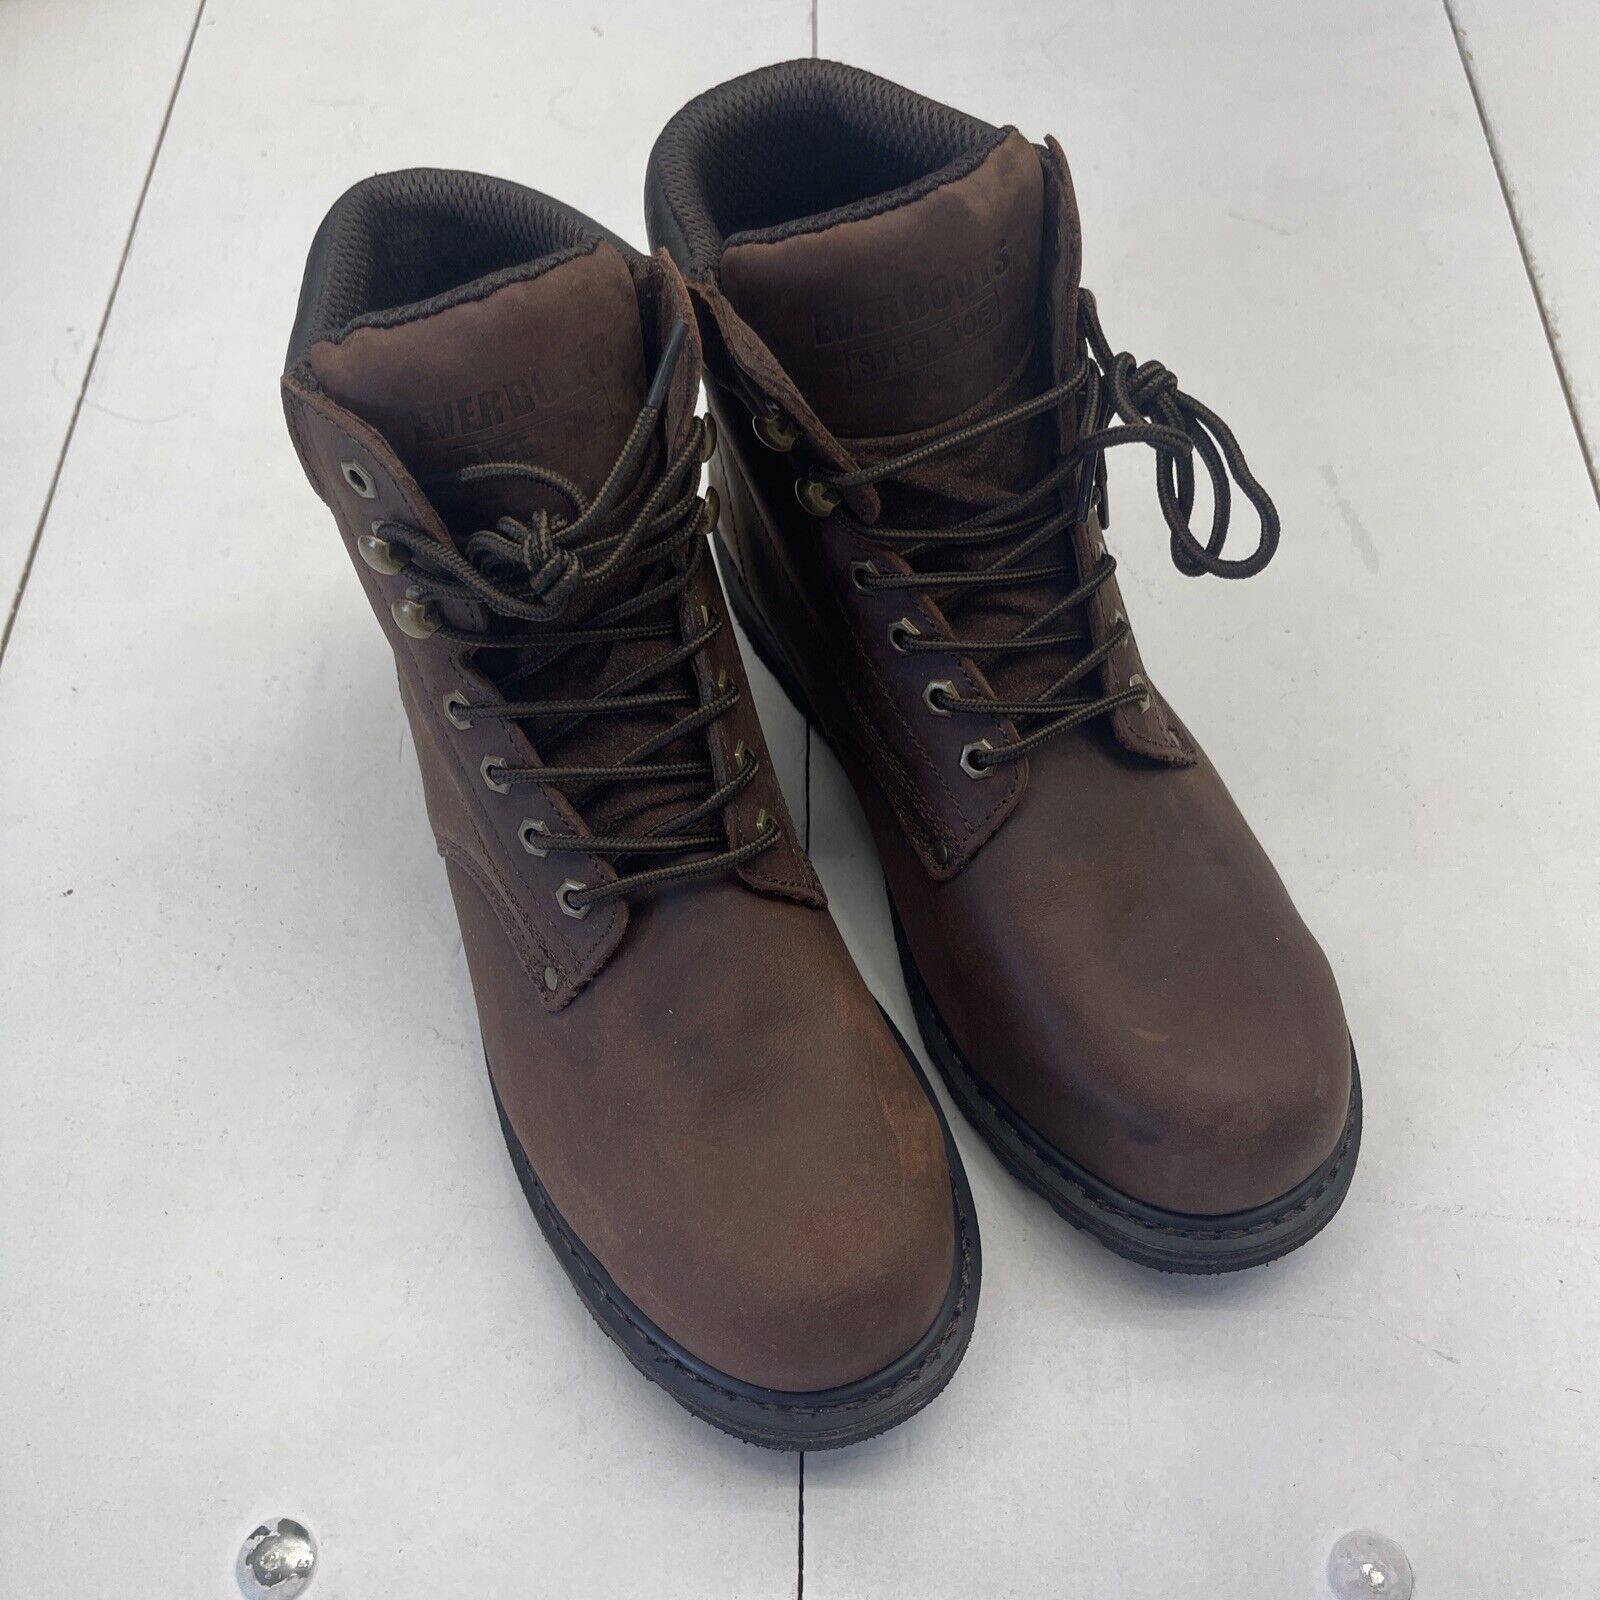 Ever Boots Tank S 6” Steel Toe Dark Brown Nubuck Boots Mens Size 12